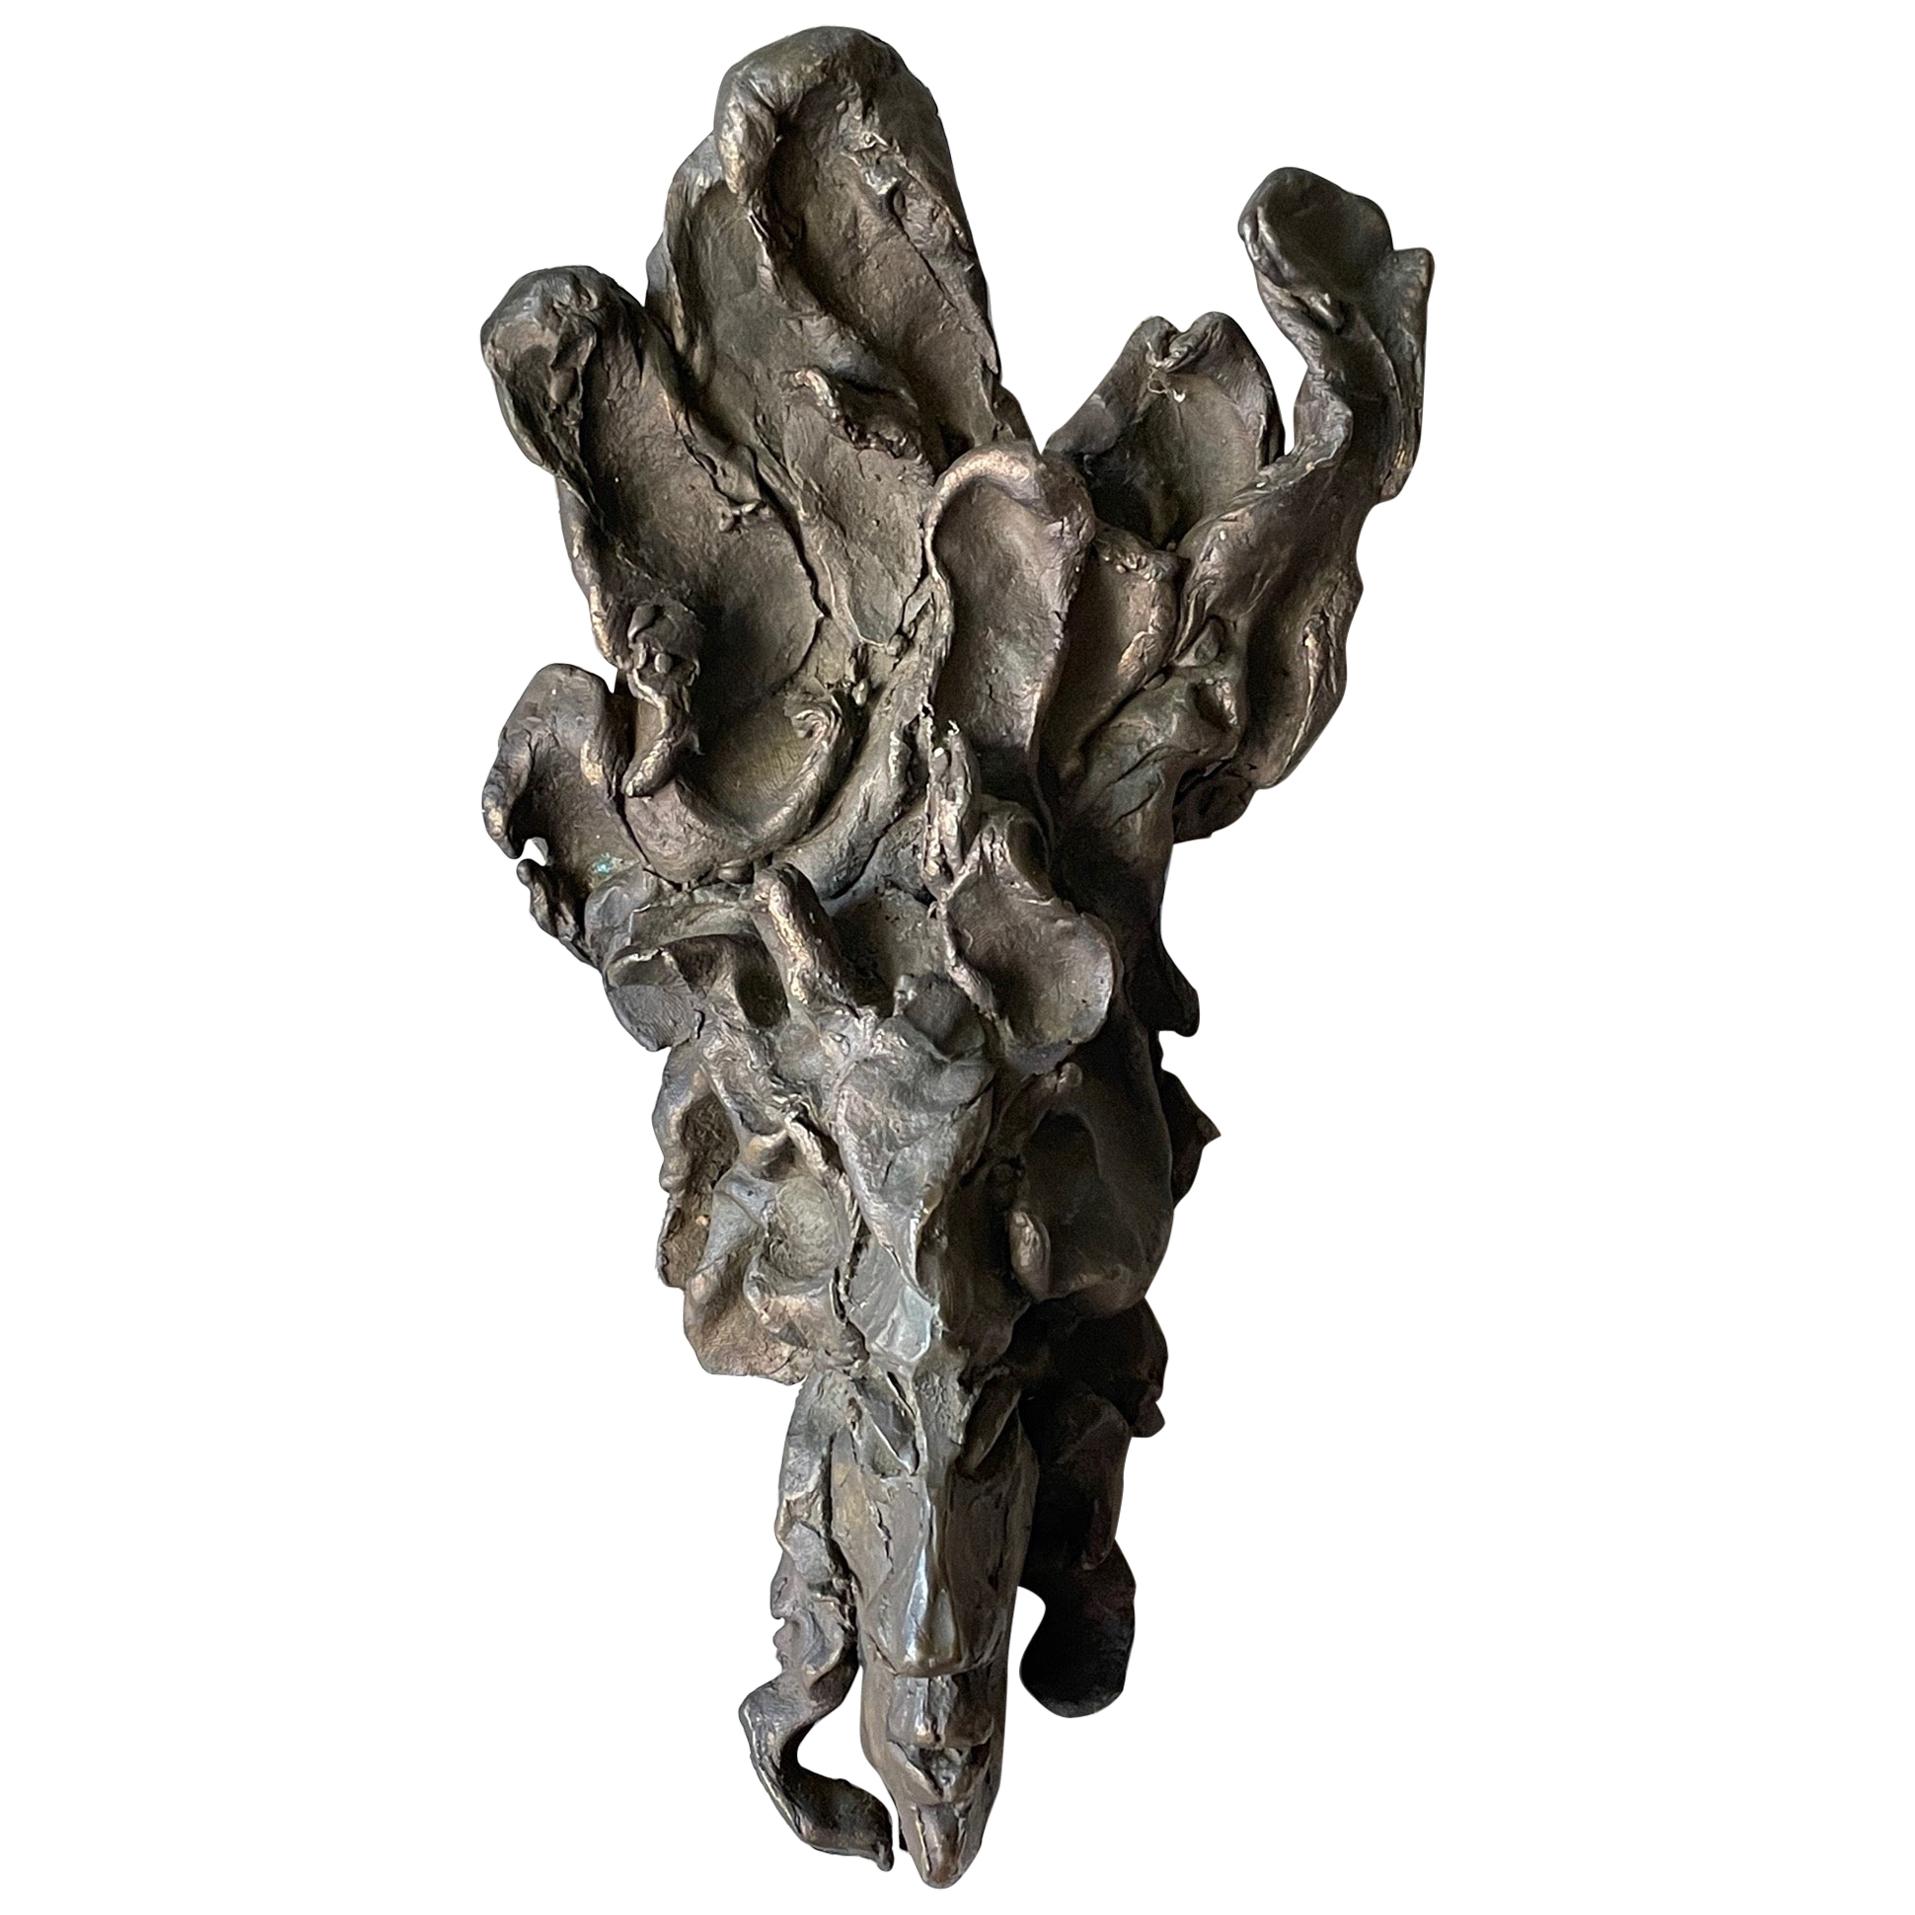 Jerry Meatyard Bronze Sculpture "Hydra" For Sale